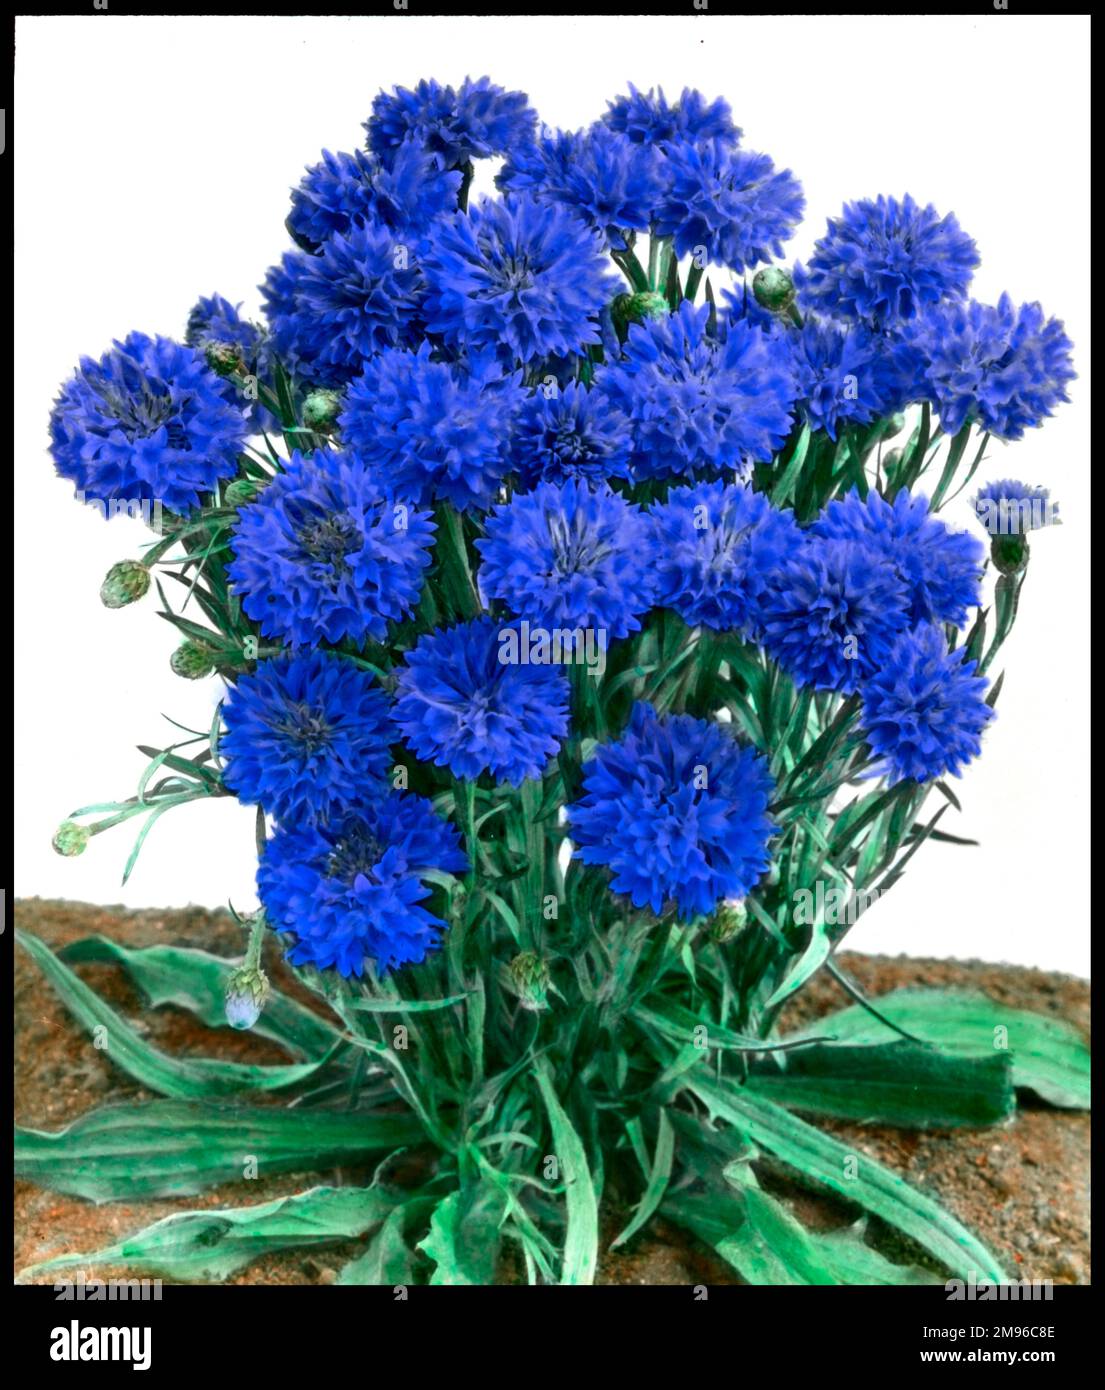 Cornflower (Dwarf), 'Jubilee Gem', Centaurea Cyanus, an annual flowering plant of the Asteraceae family.  The flowers are a dazzling blue. Stock Photo